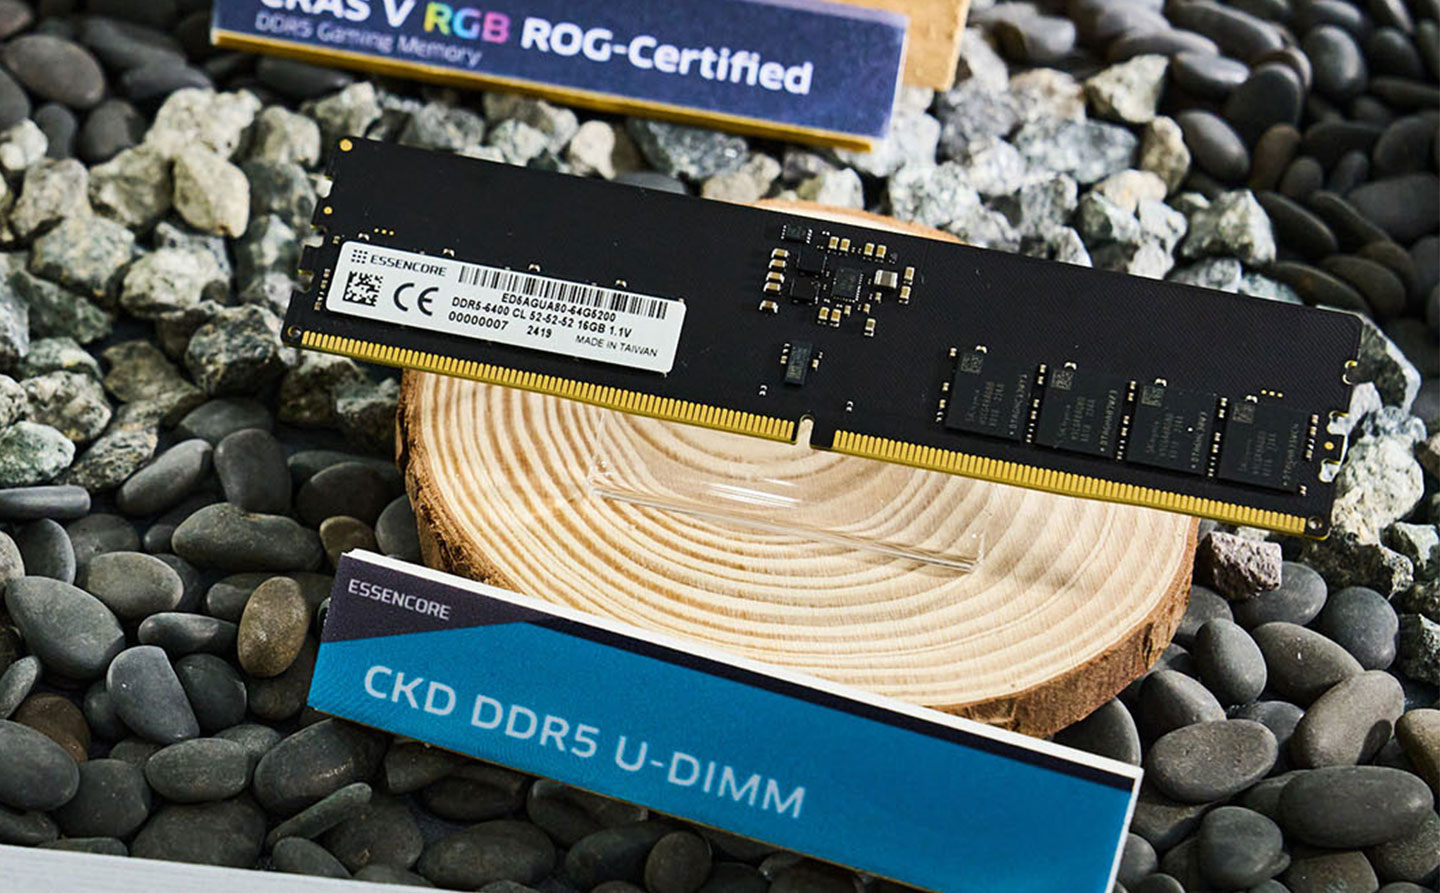 CKD DDR5 U-DIMM 記憶體模組透過 CKD 元件提升高頻時脈運行的穩定性。